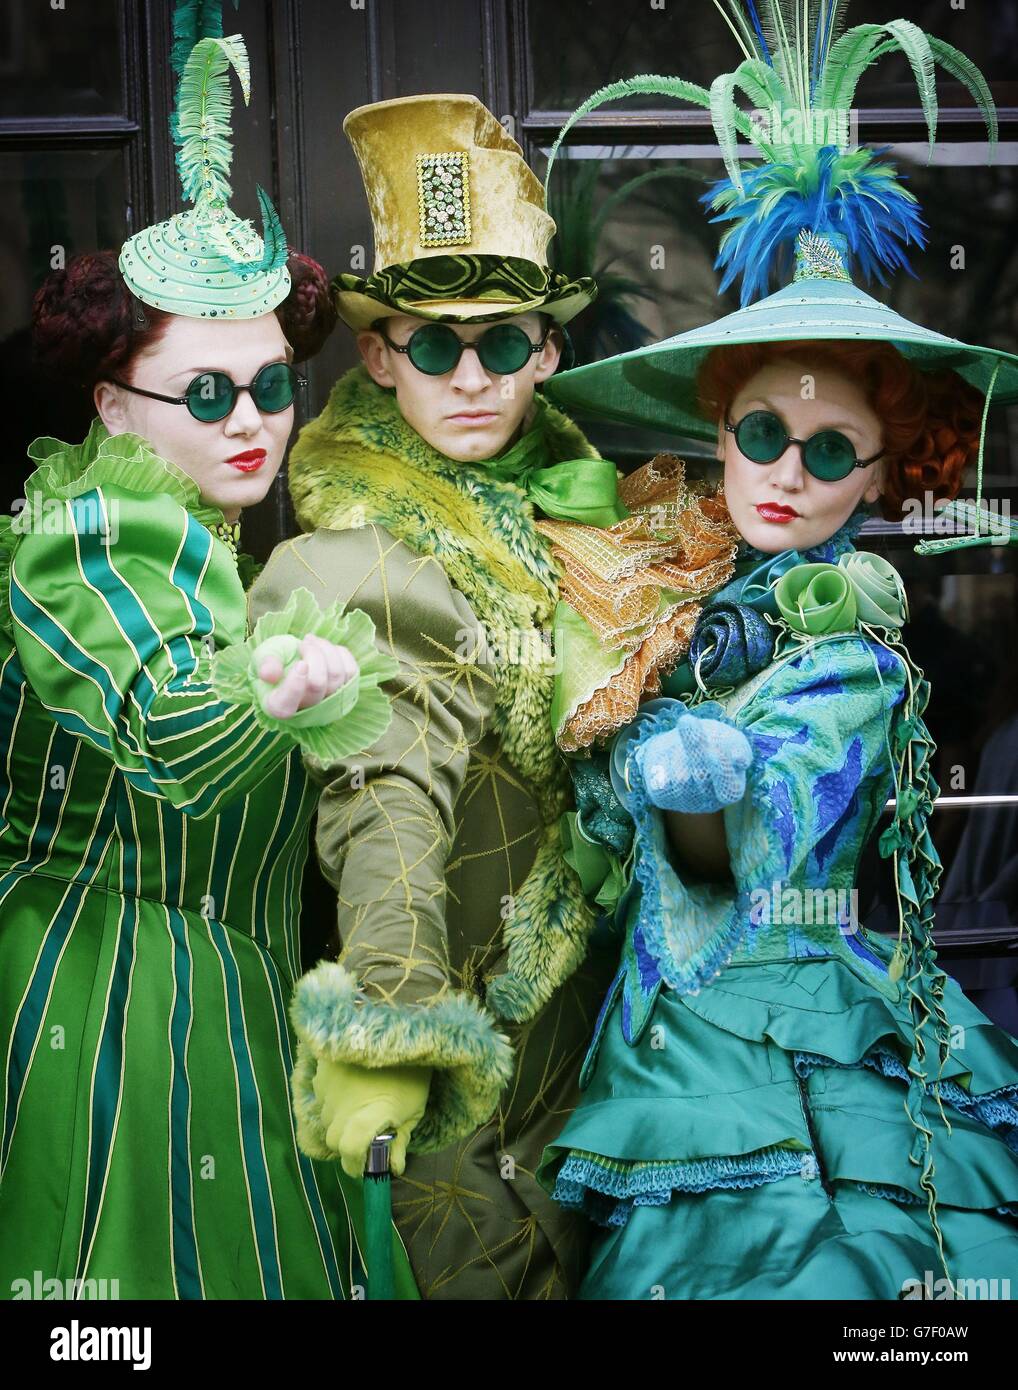 s Tony Award winning Emerald City costumes to help promote the musical opening at the Edinburgh Playhouse in Edinburgh, Scotland. Stock Photo